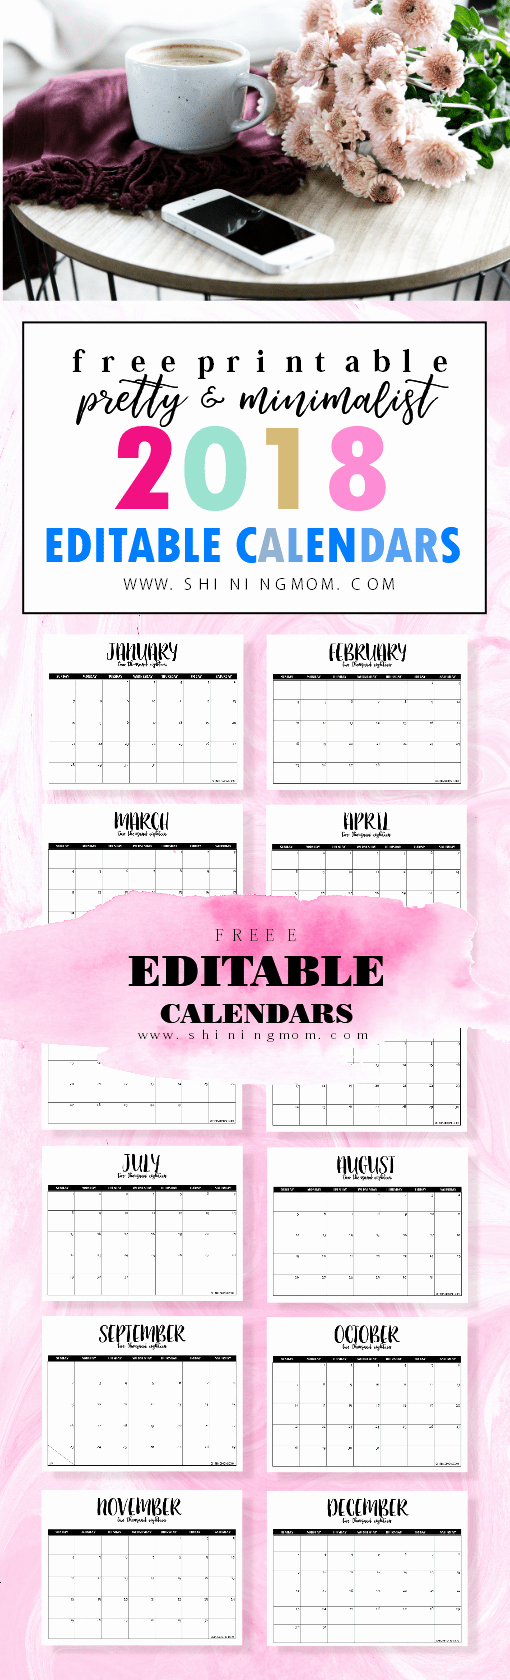 Free Printable Editable Calendar Elegant Free Fully Editable 2018 Calendar Template In Word